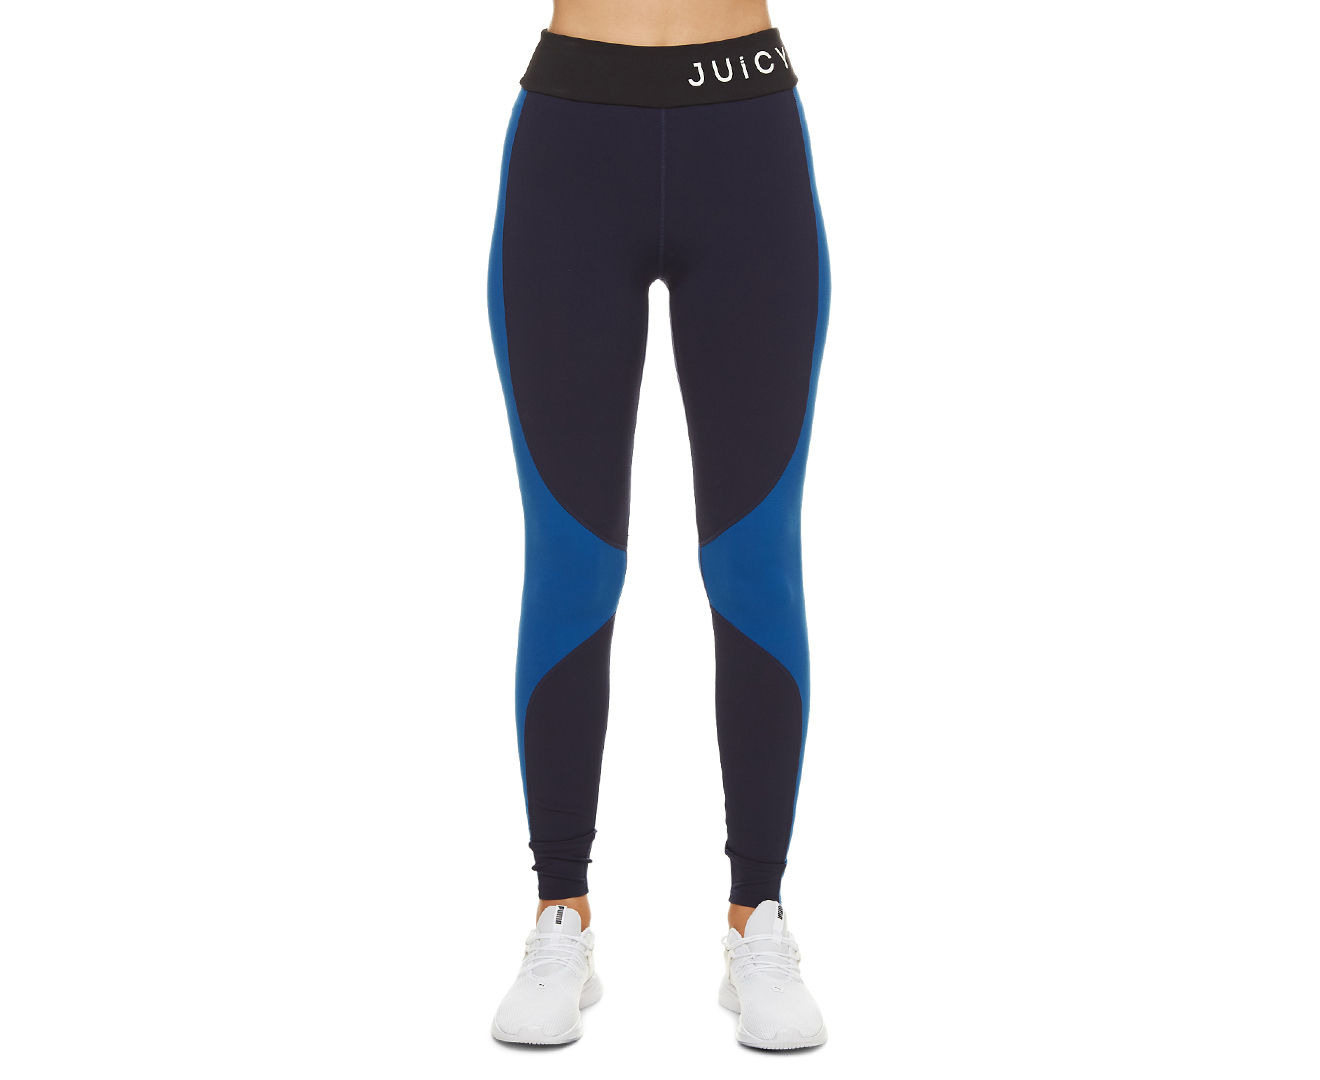 Juicy Couture Sport Women's High Waist Tights / Leggings - Maritime Blue